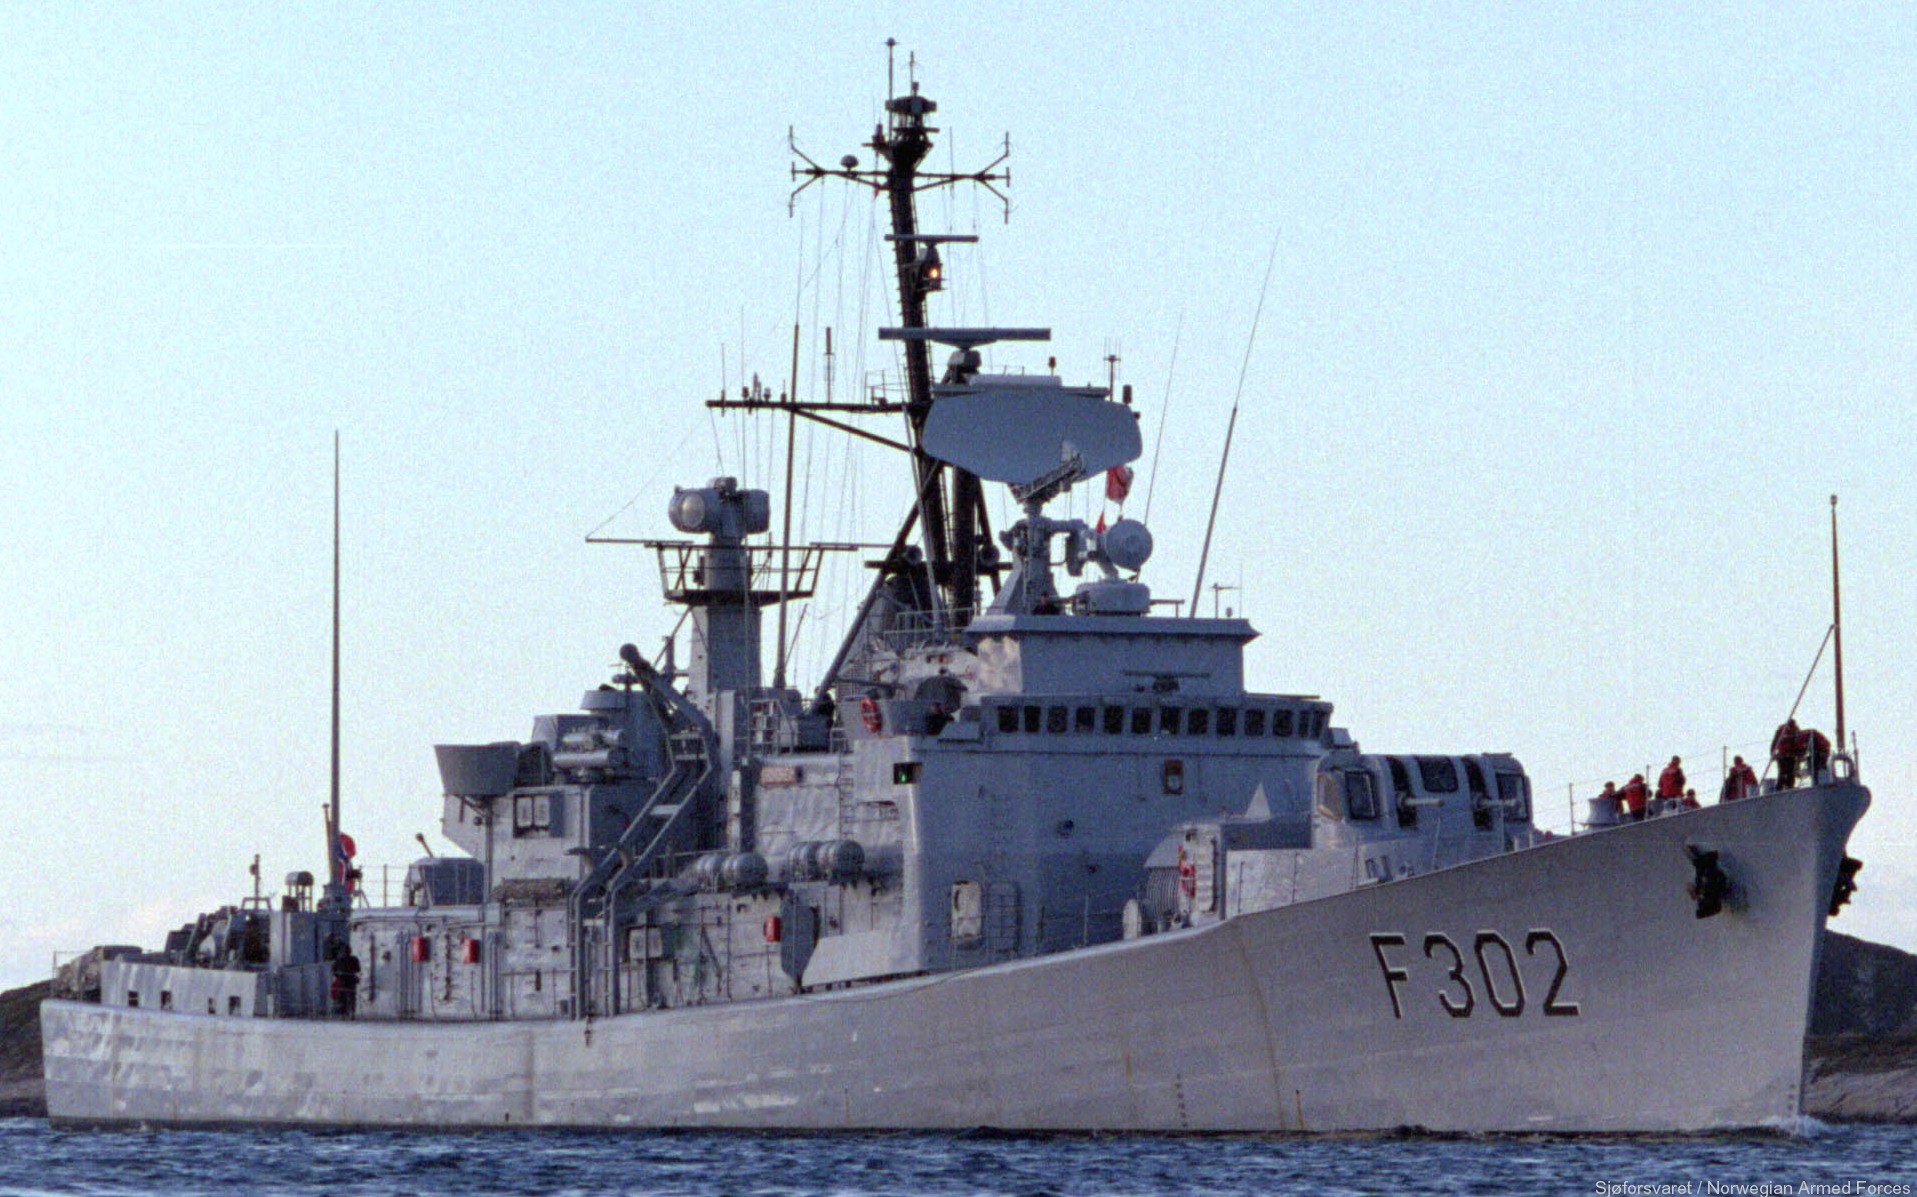 f-302 hnoms trondheim knm oslo class frigate royal norwegian navy sjoforsvaret 17